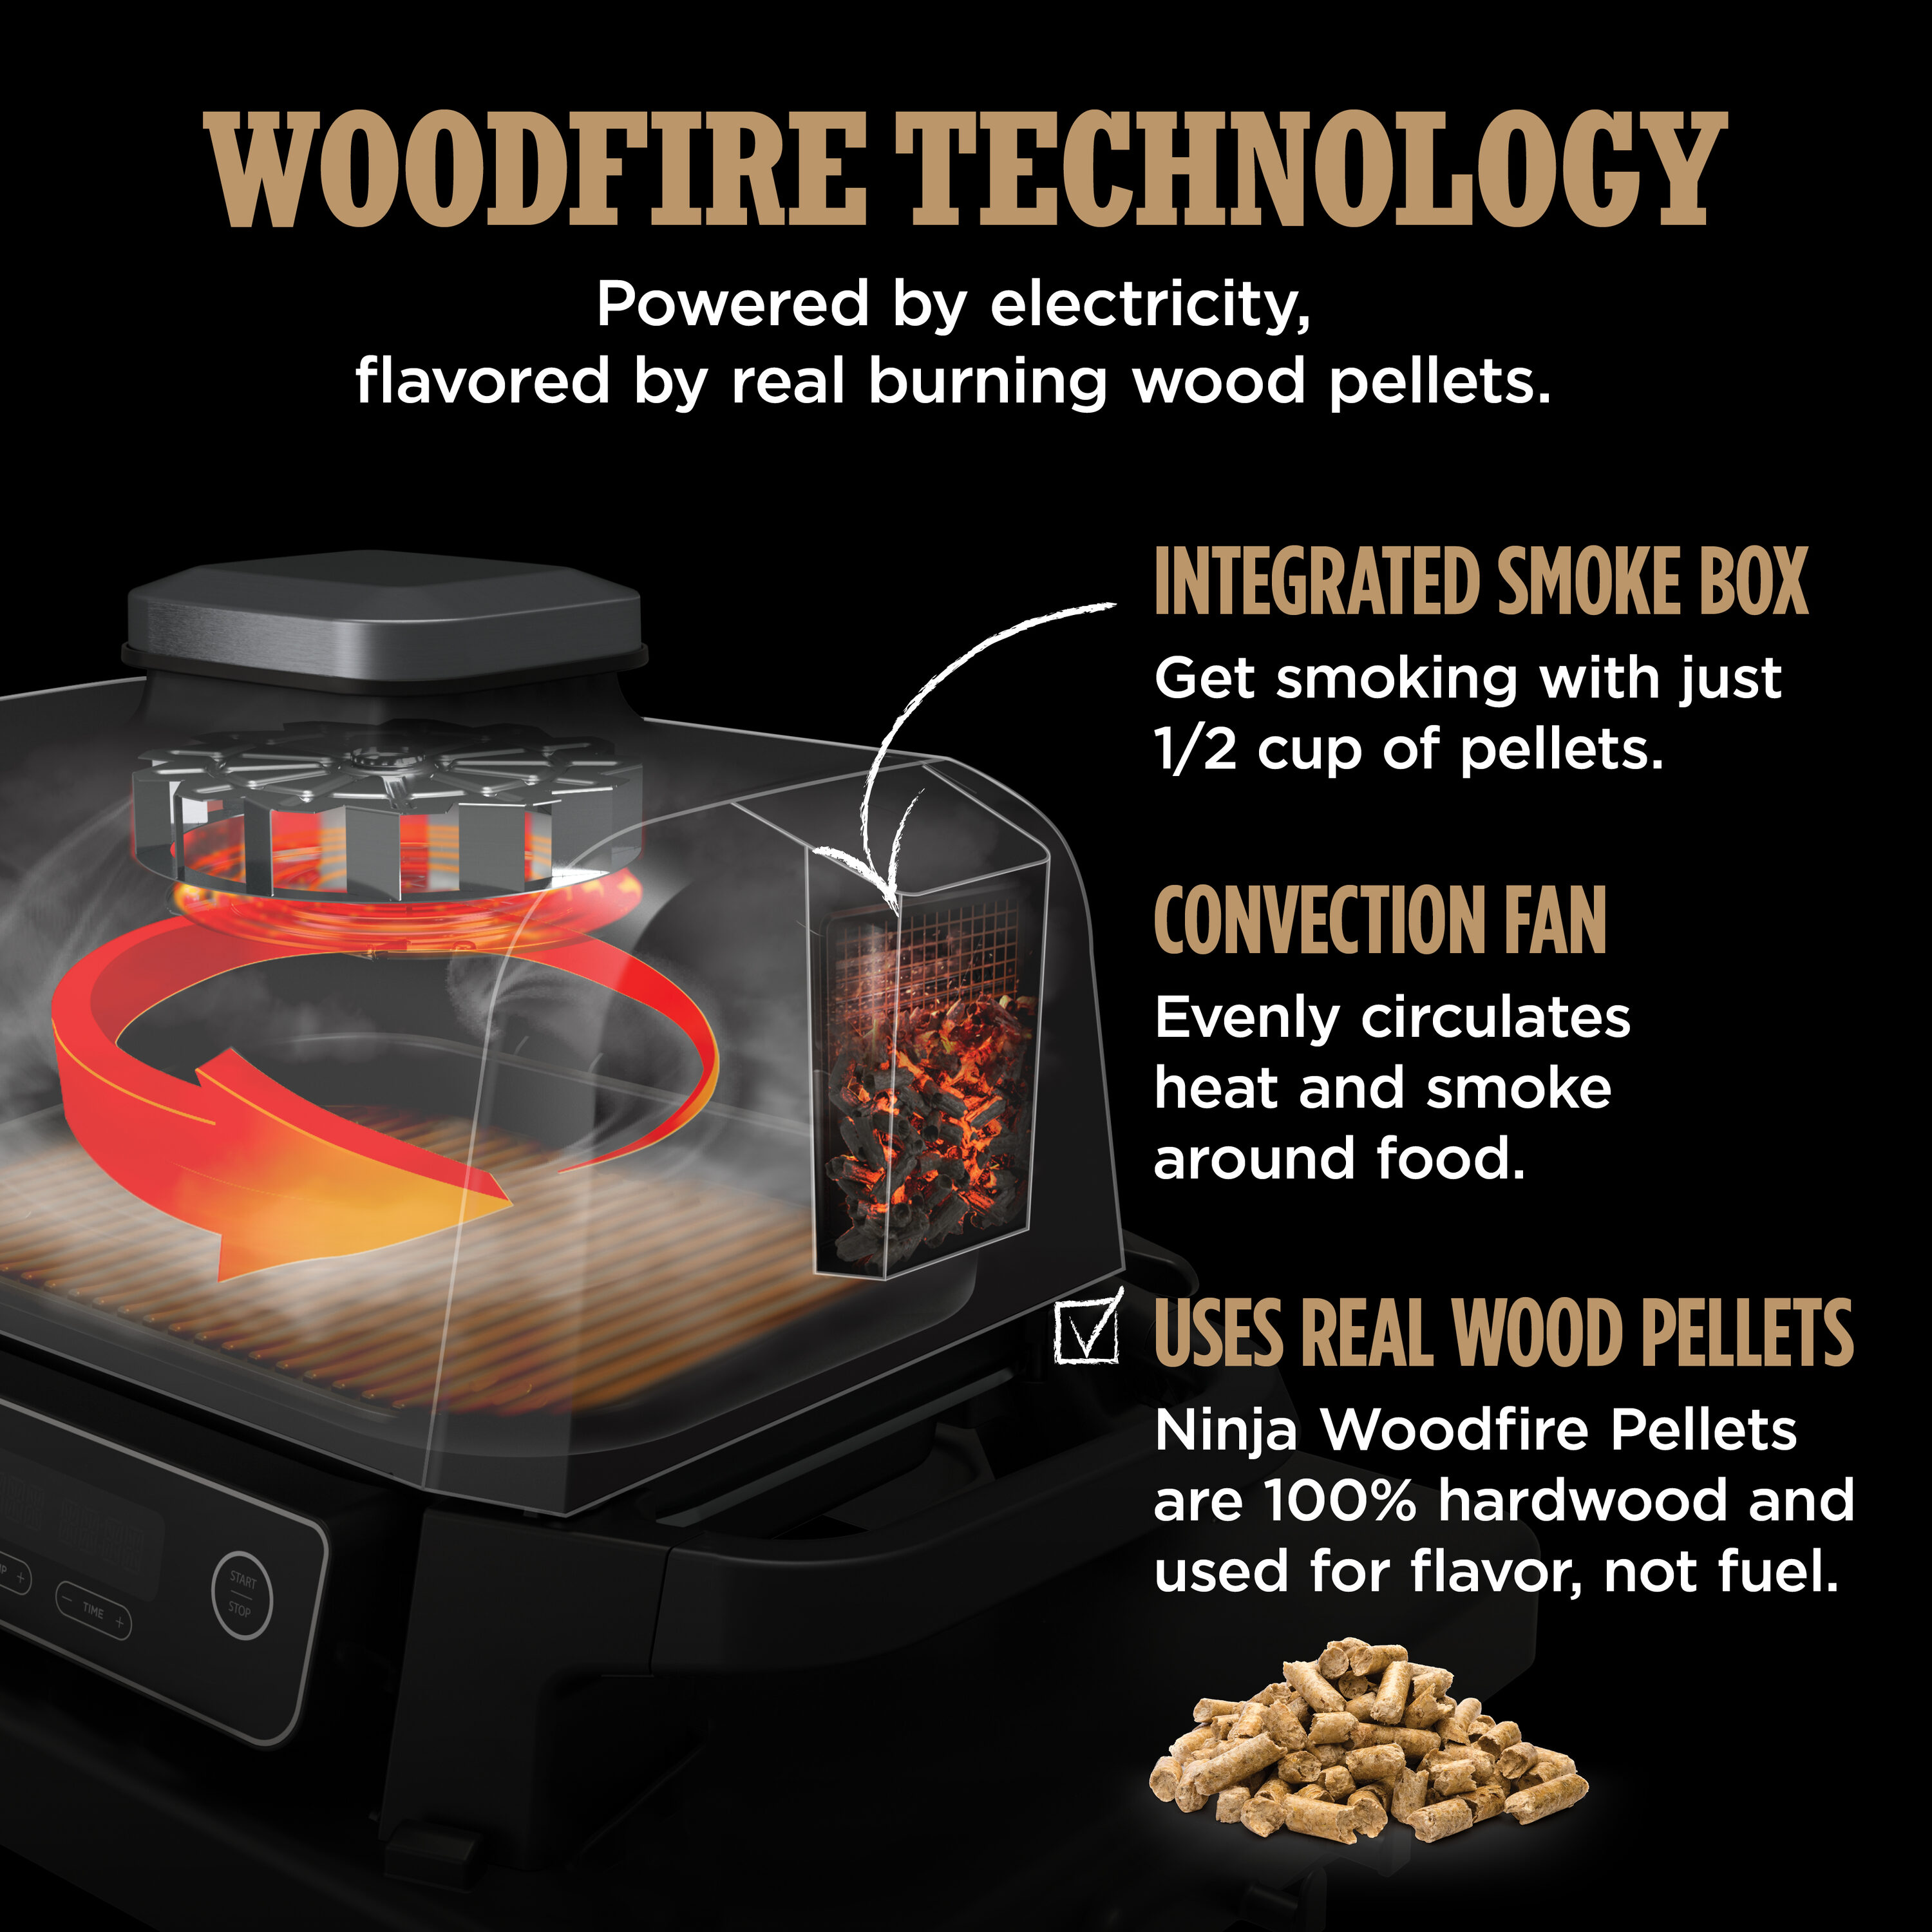 Ninja Woodfire Outdoor Grill & Smoker, 7-in-1 Master Grill, BBQ Smoker, &  Outdoor Air Fryer with Woodfire Technology Grey OG701 - Best Buy